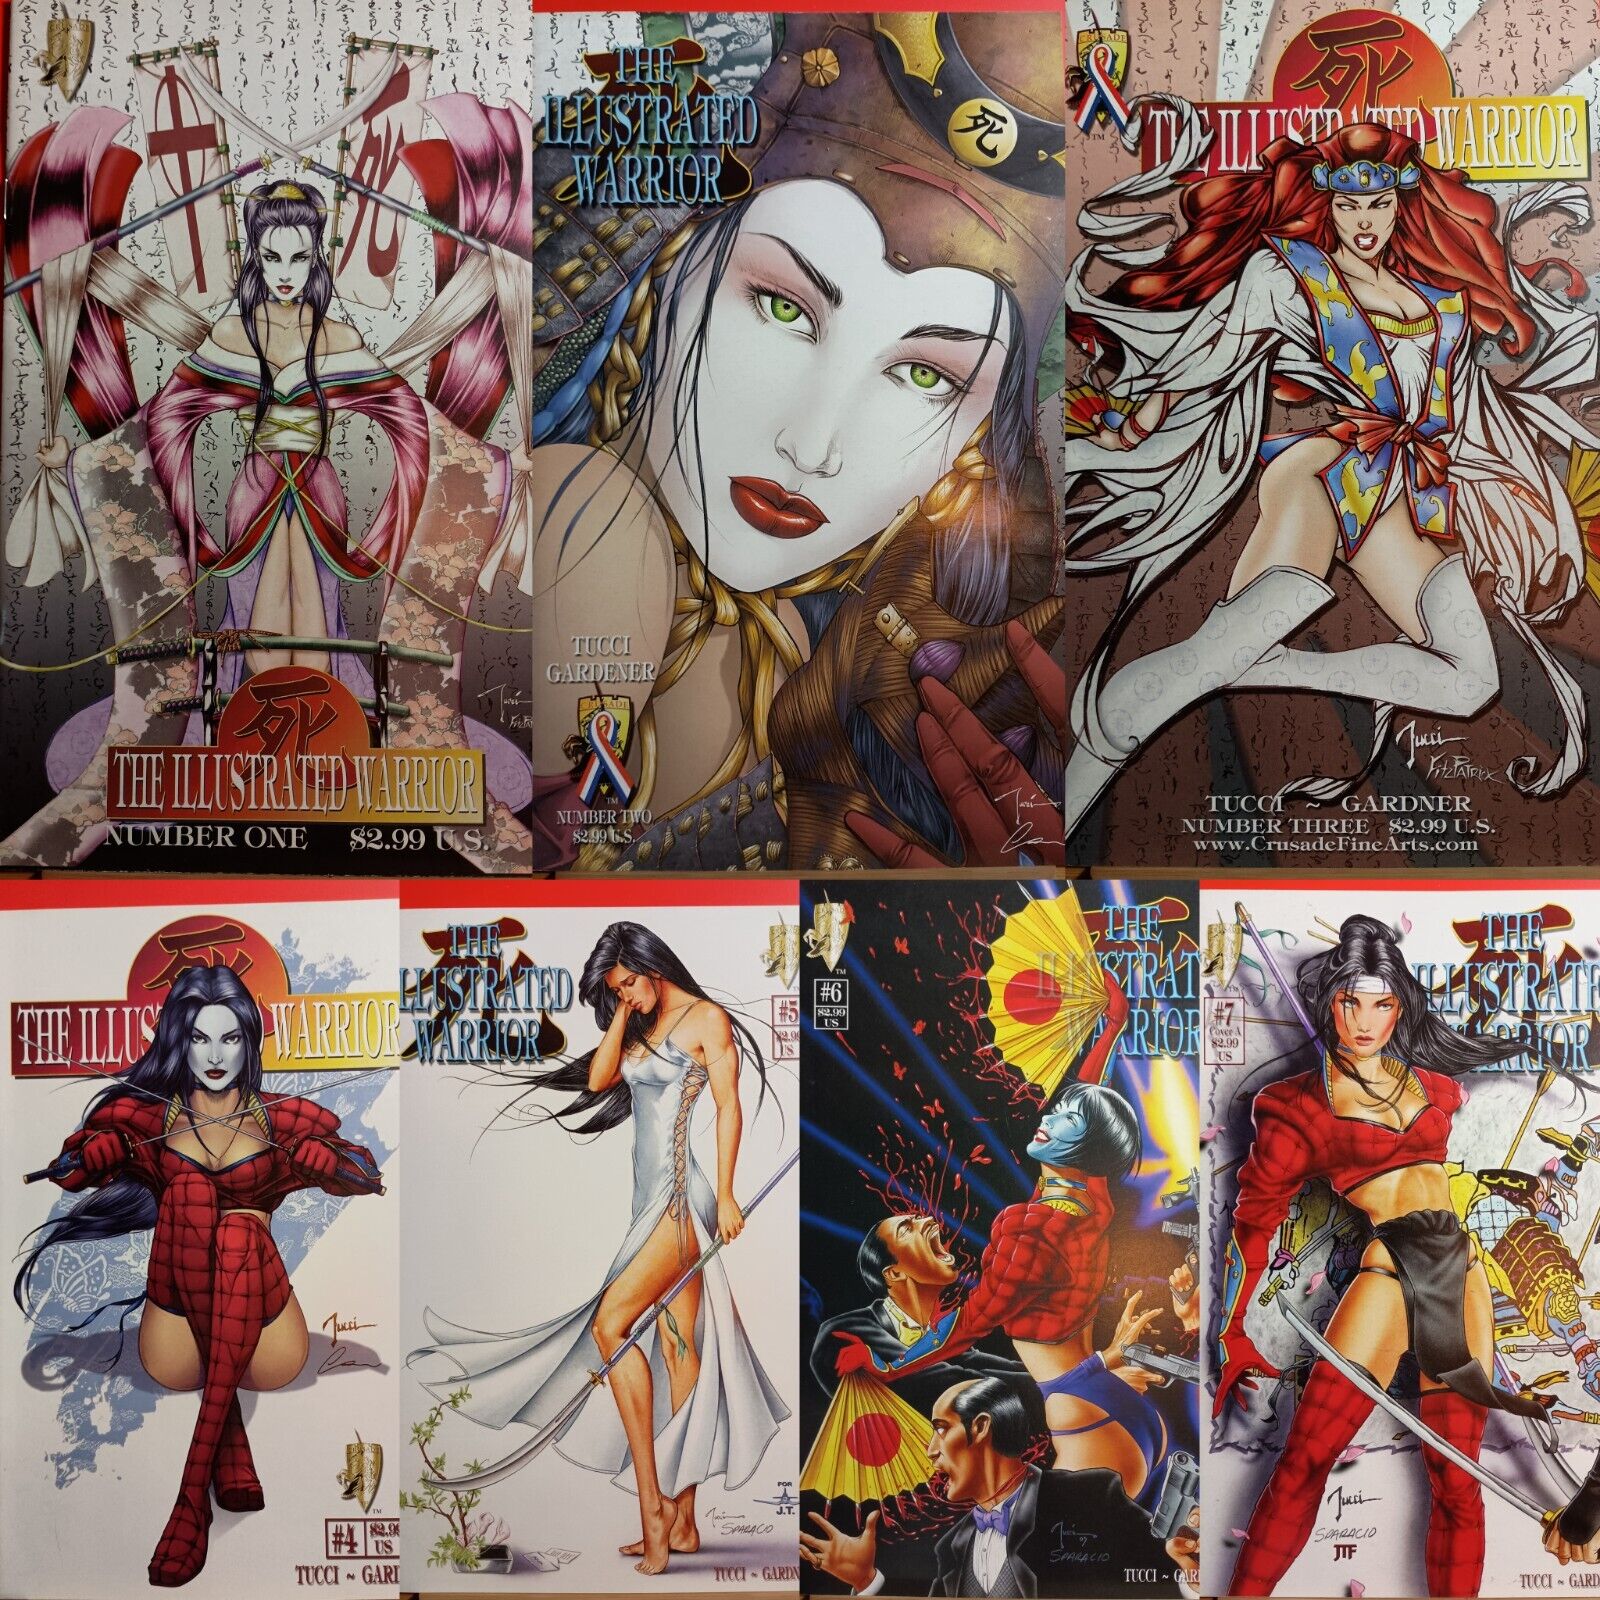 2002 Crusade Comics Shi Illustrated Warrior 1-7 William Tucci Cover Variant Set